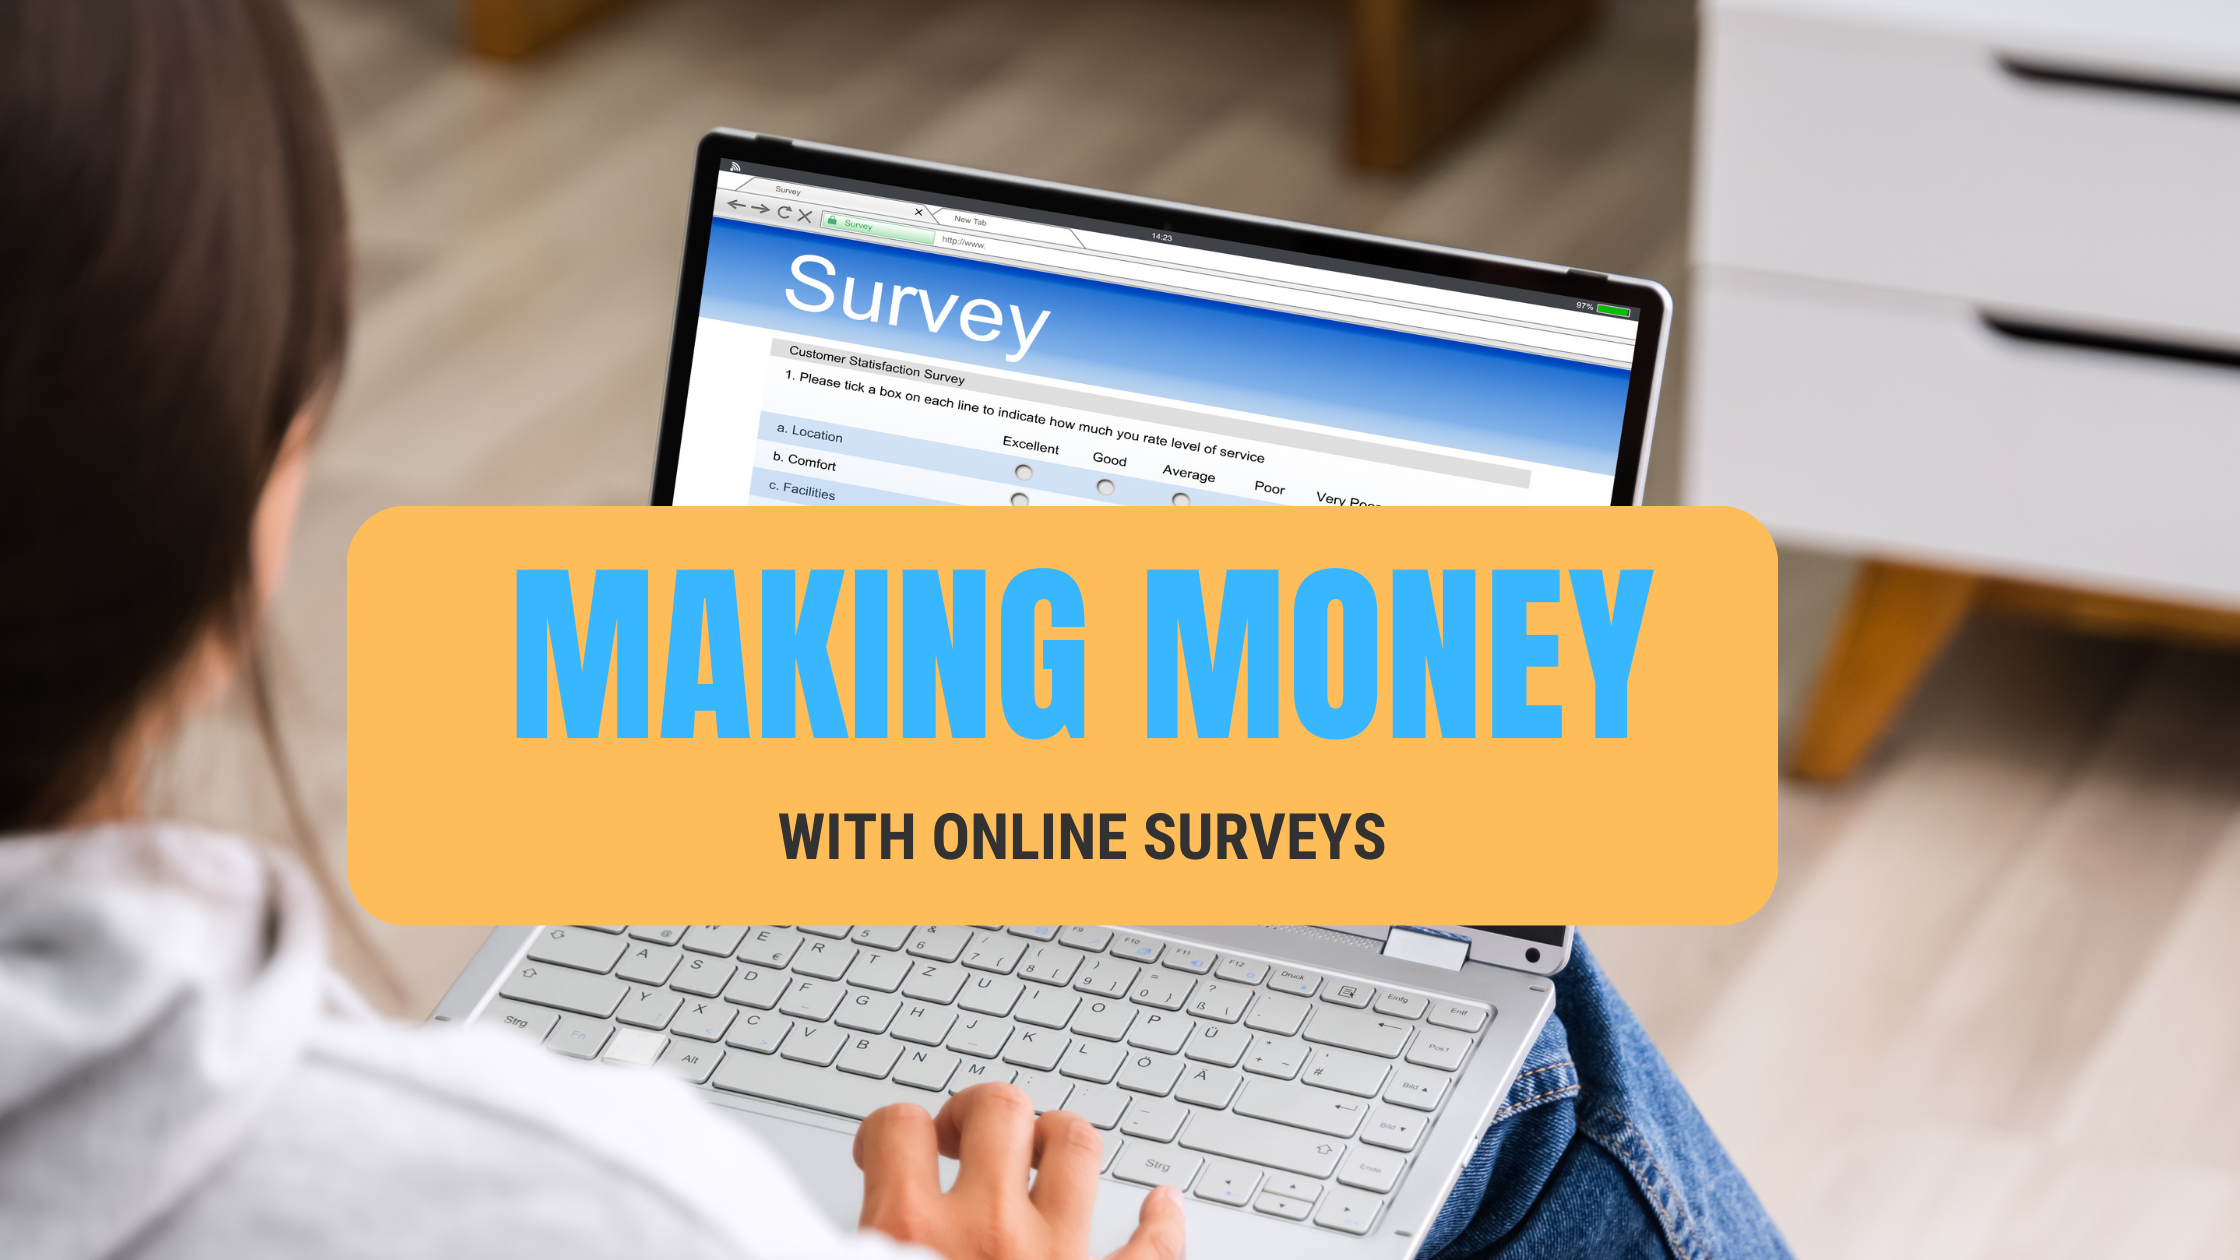 Making money with online surveys